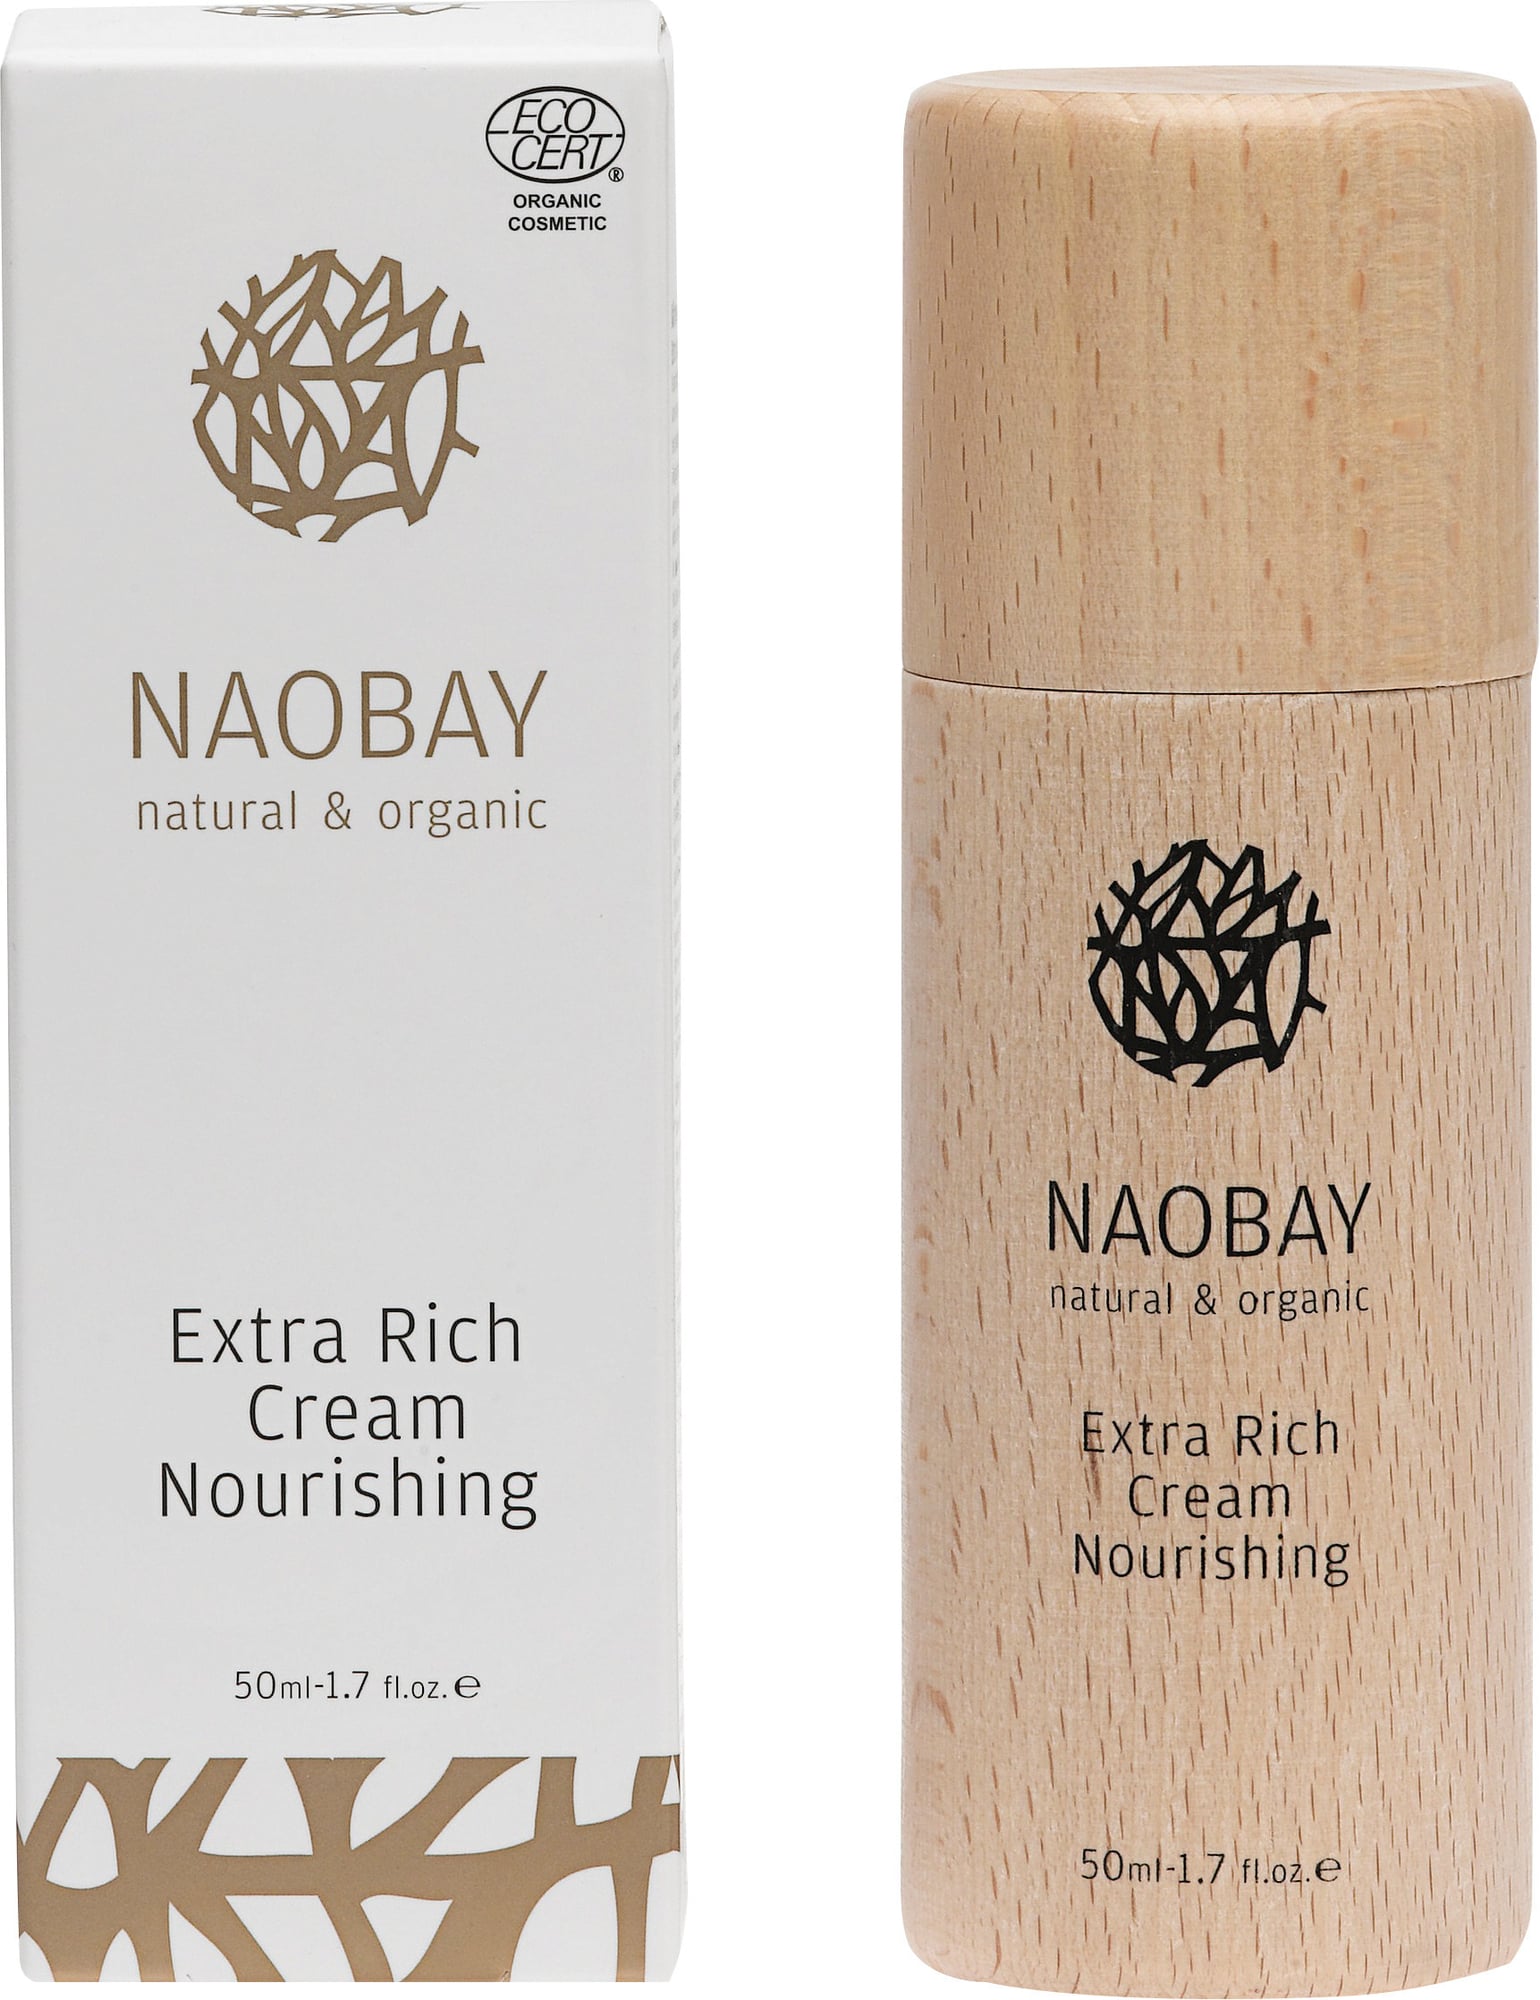 NAOBAY Extra Rich Cream Nourishing